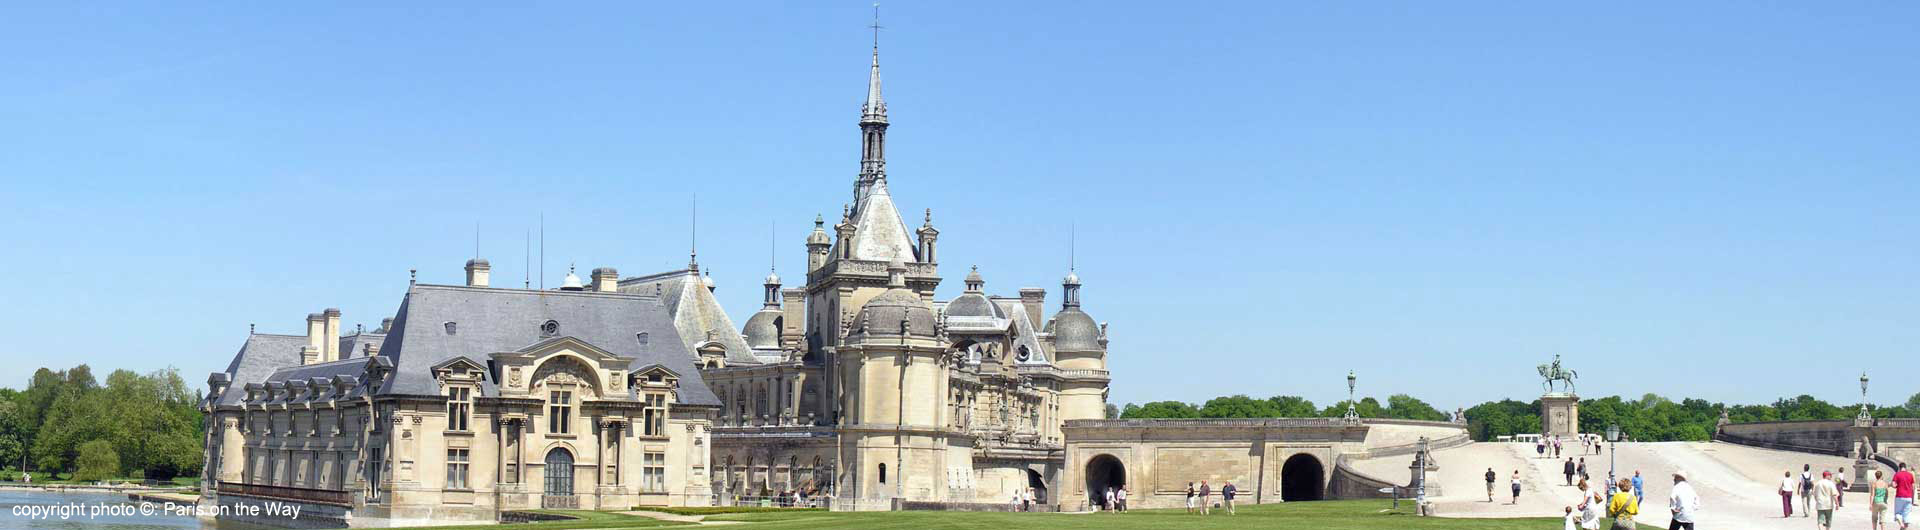 The château de Chantilly